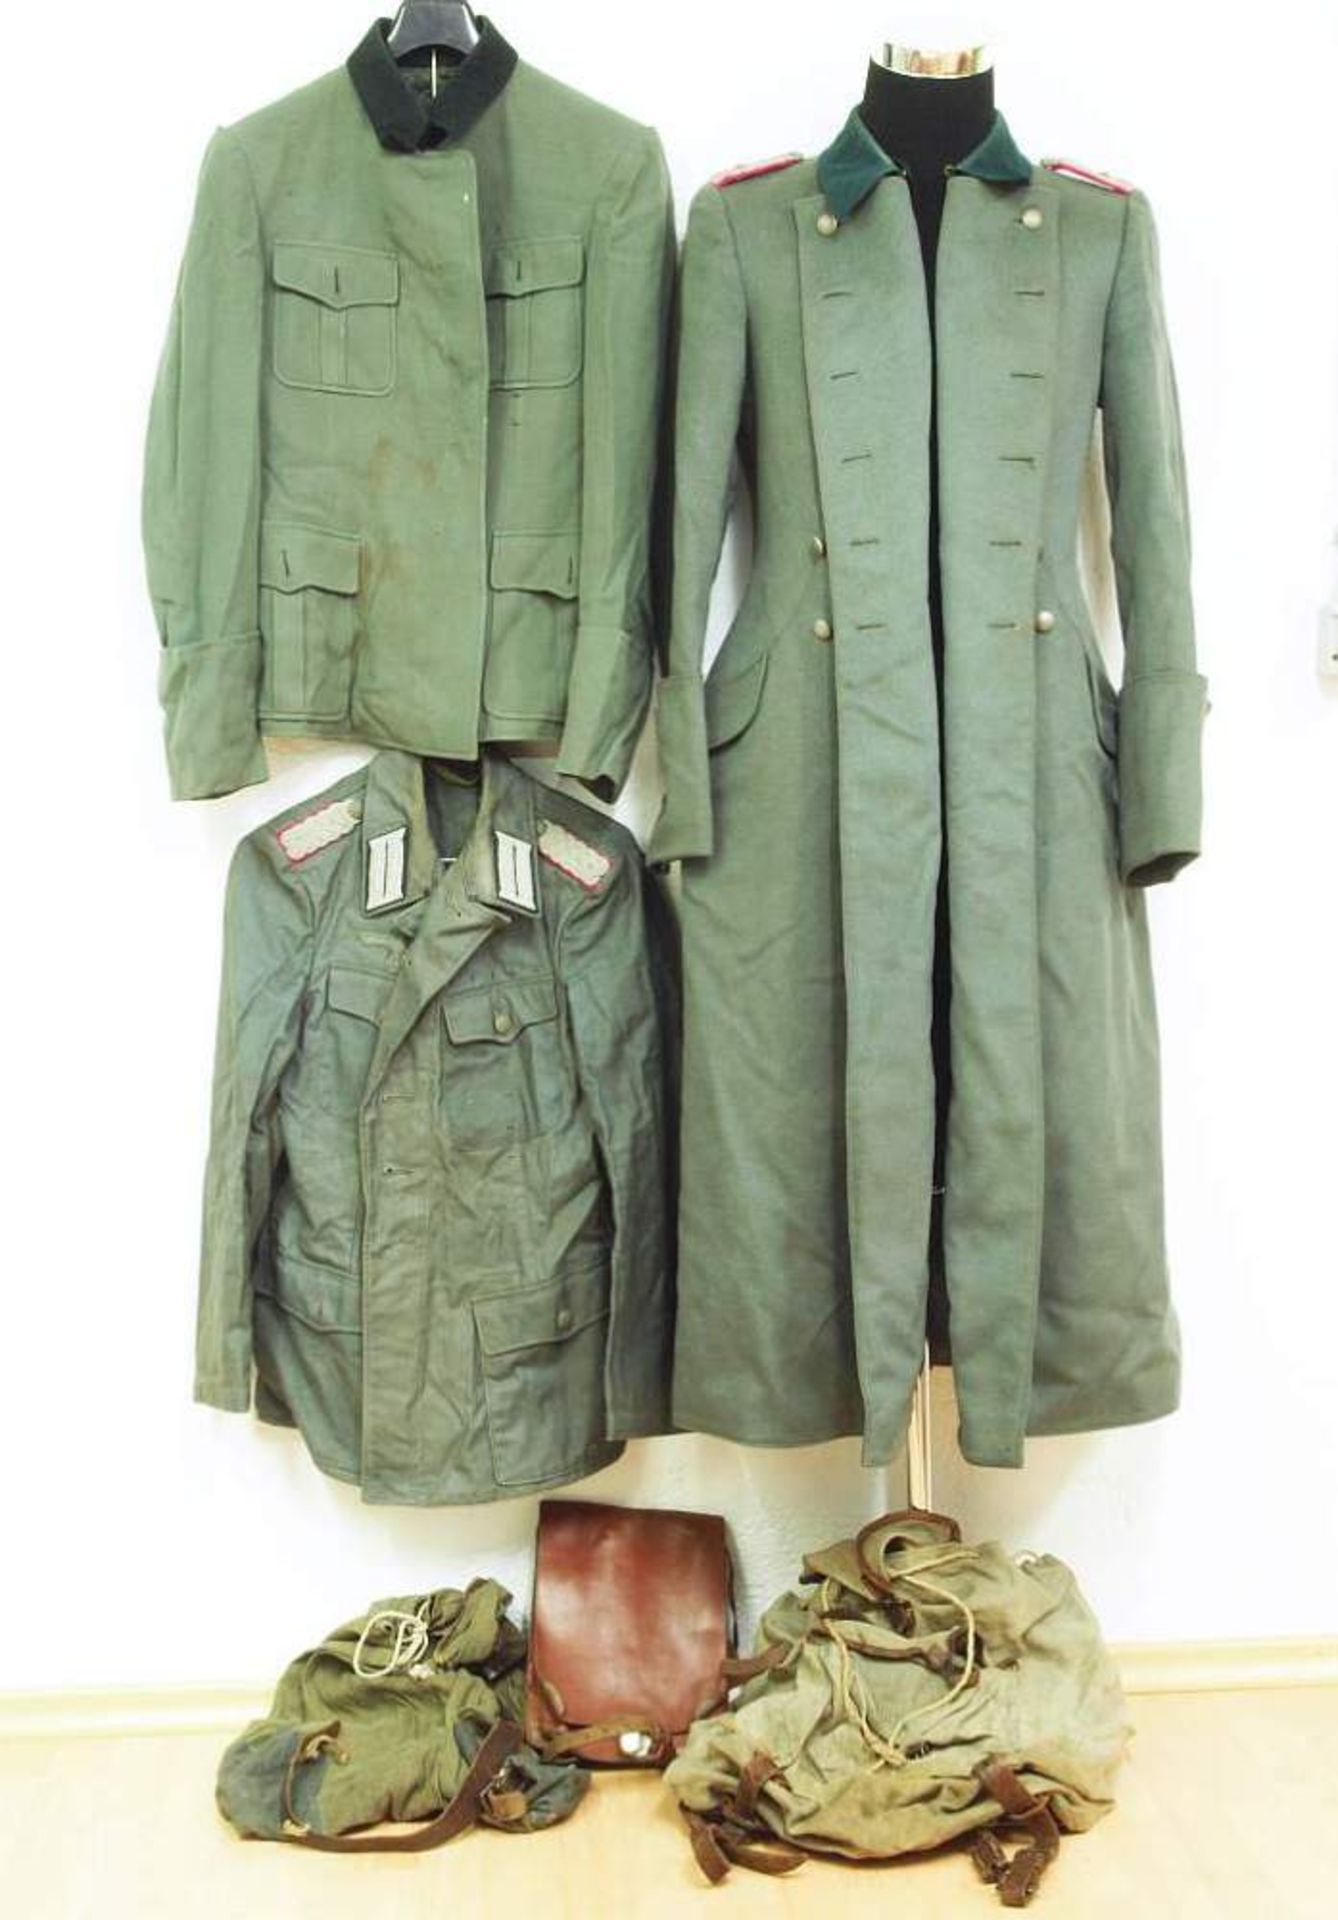 Uniformnachlass des Oberstleutnants Rolf Ewald im Infanterieregiment 19.
Uniformnachlass des